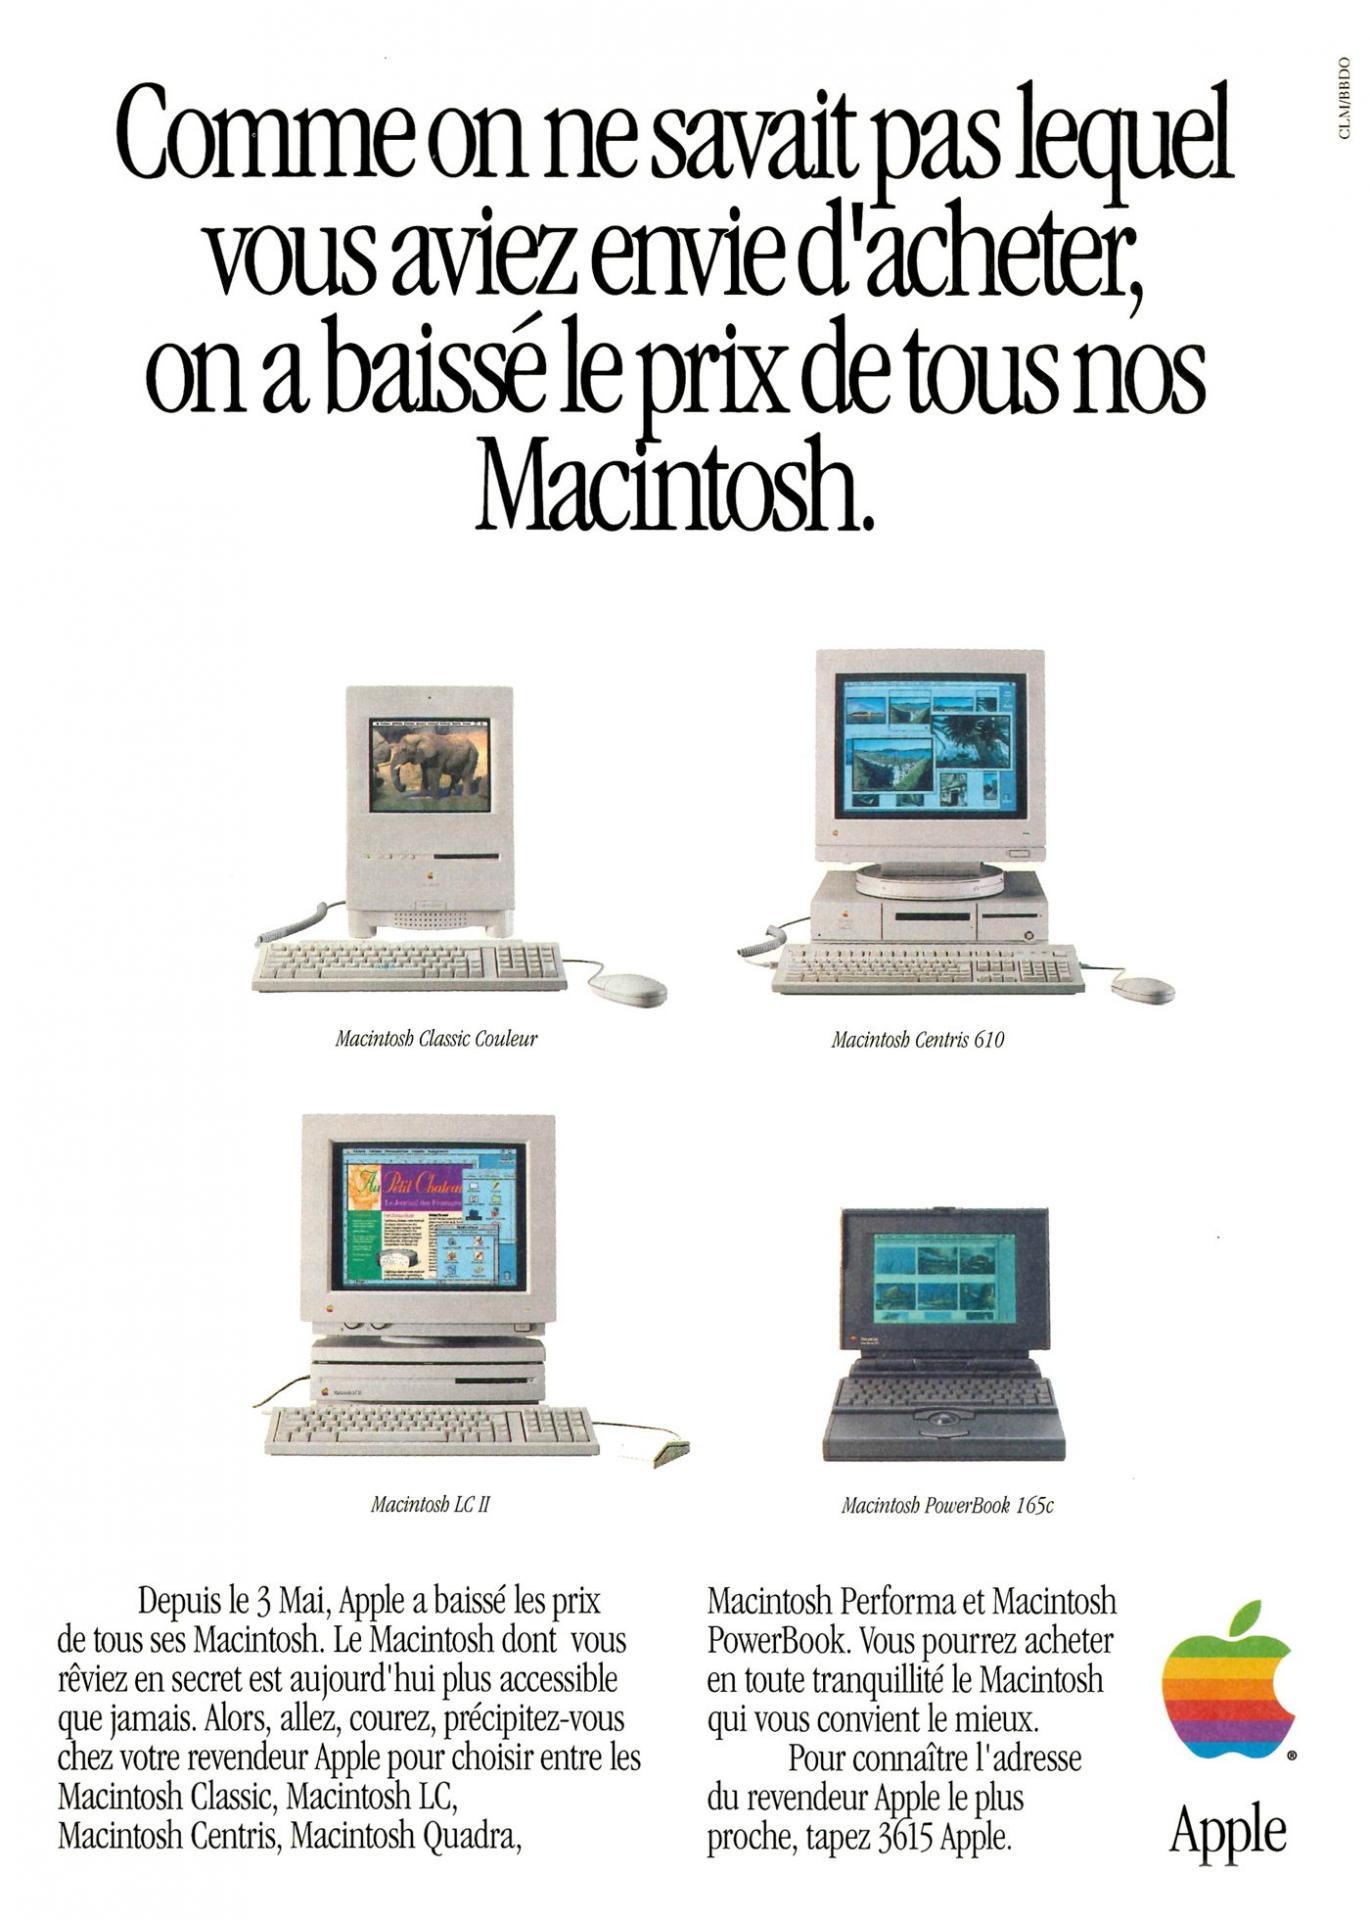 1993 apple ad centris powerbook classic lcii